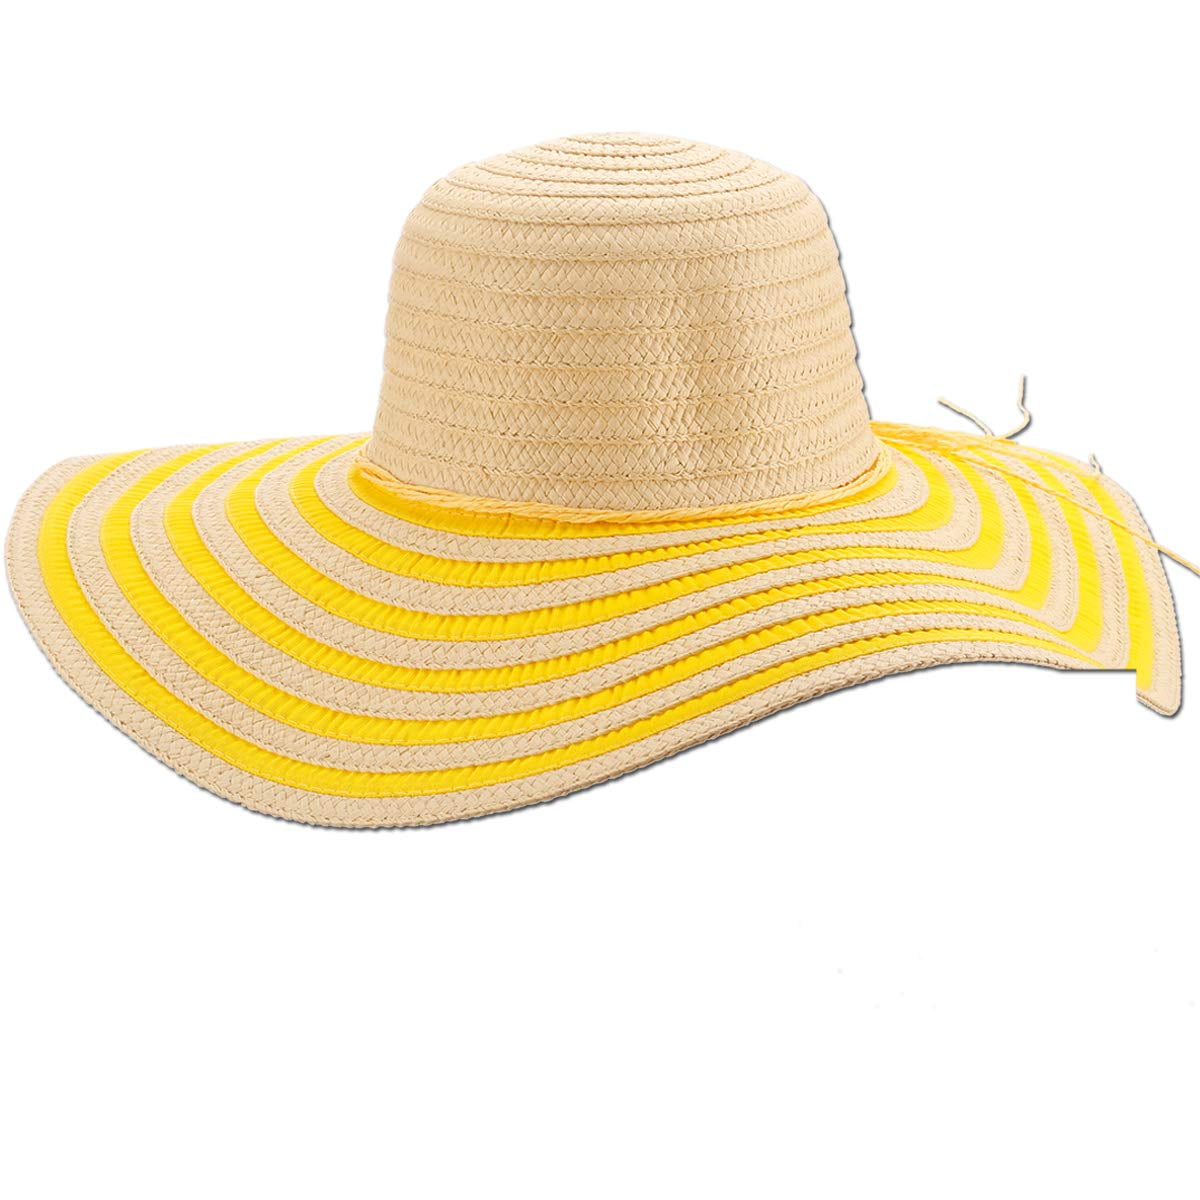 Panama Jack Women's Sun Hat - Packable, Lightweight Braid/Ribbon, UPF ...